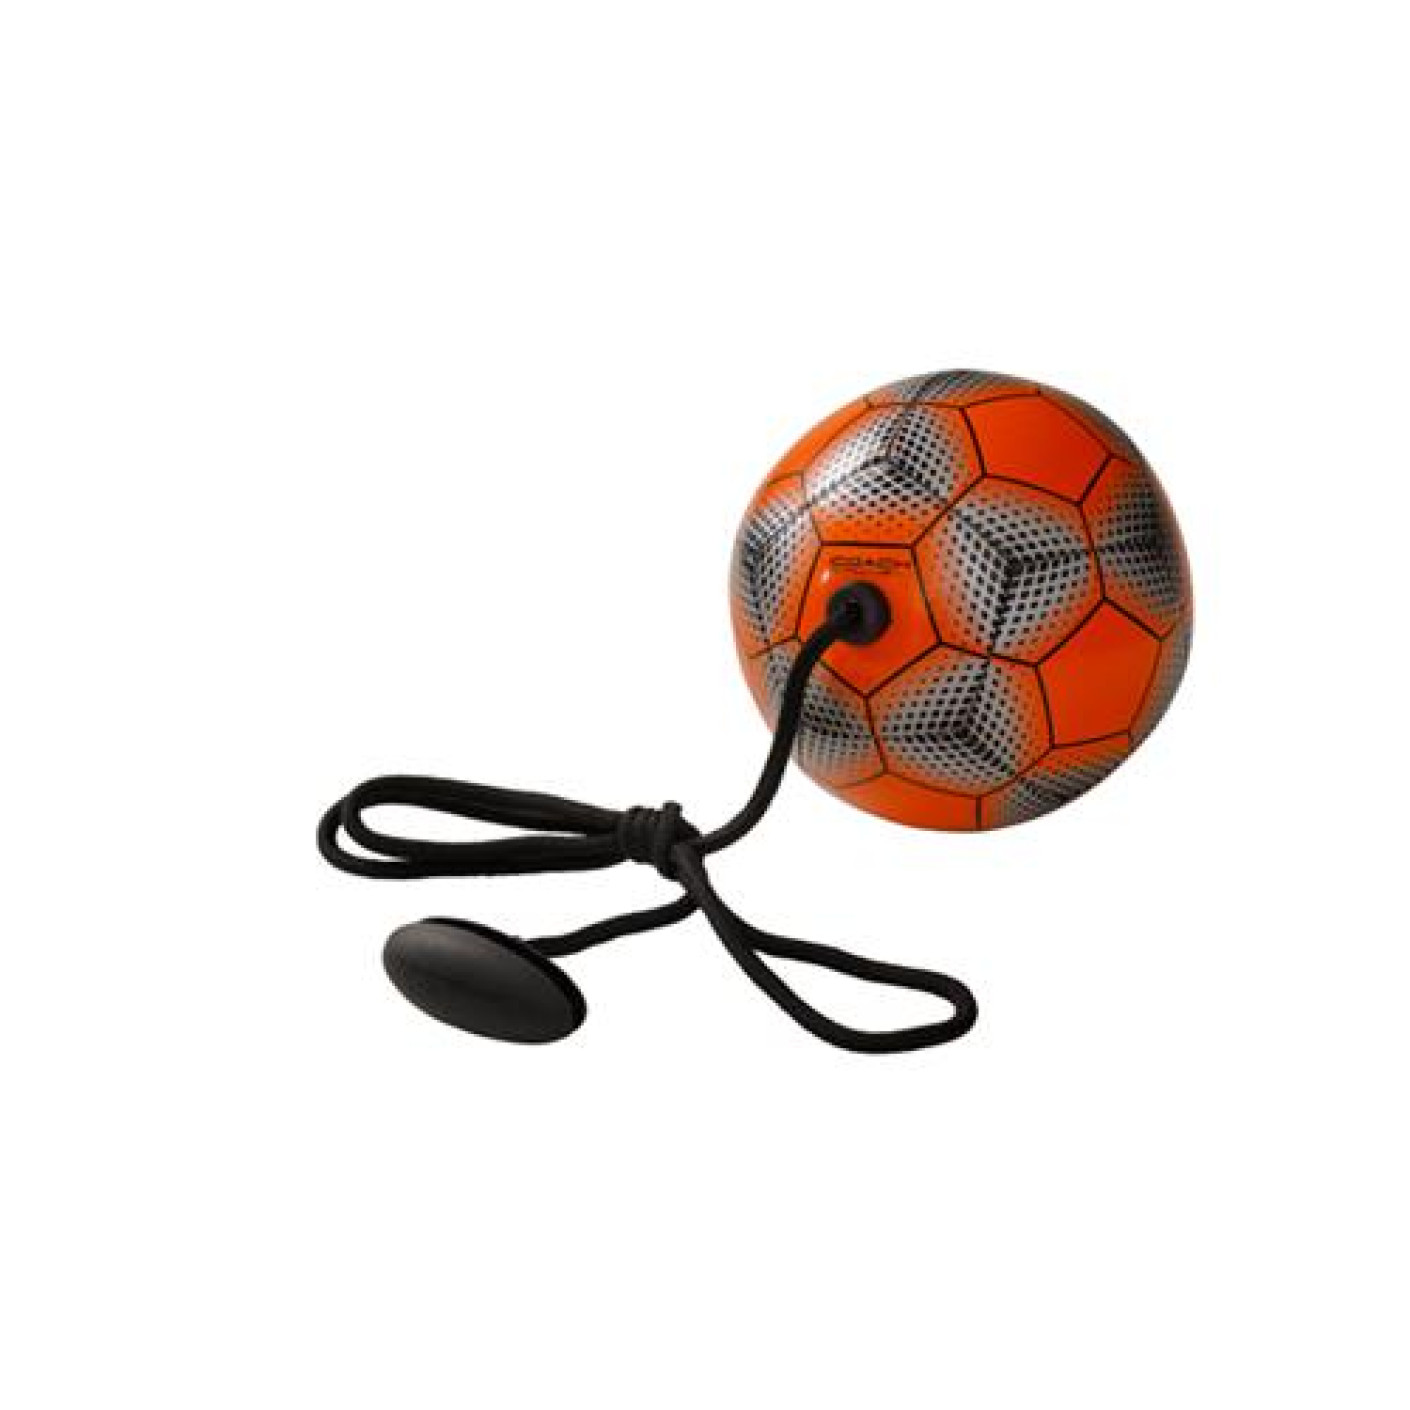 iCoach mini trainingsbal 3.0 Oranje